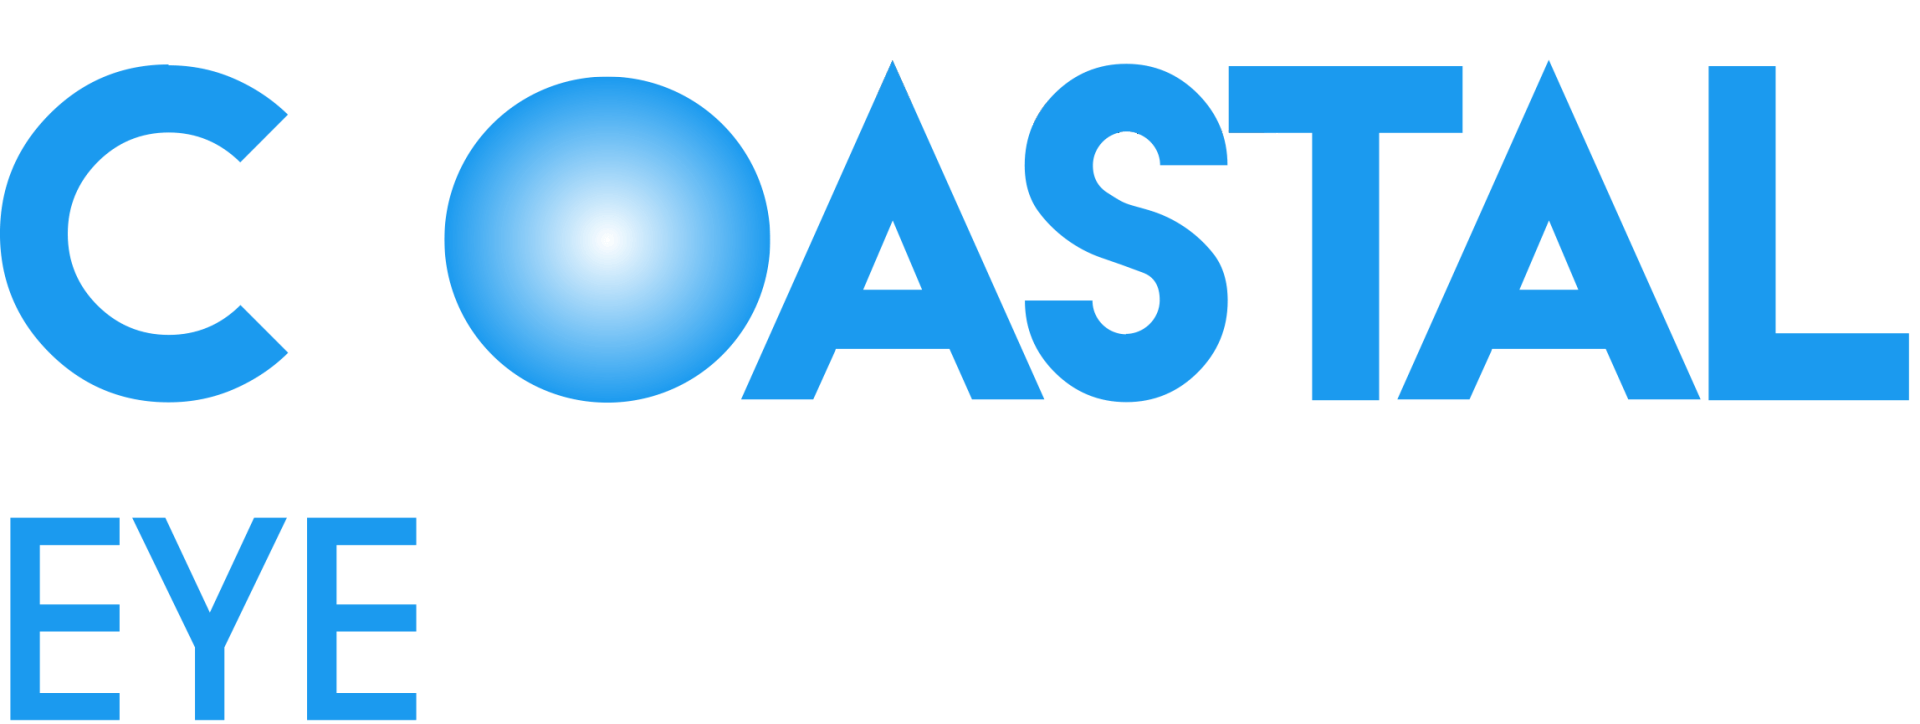 Coastal Eye Surgeons's Logo